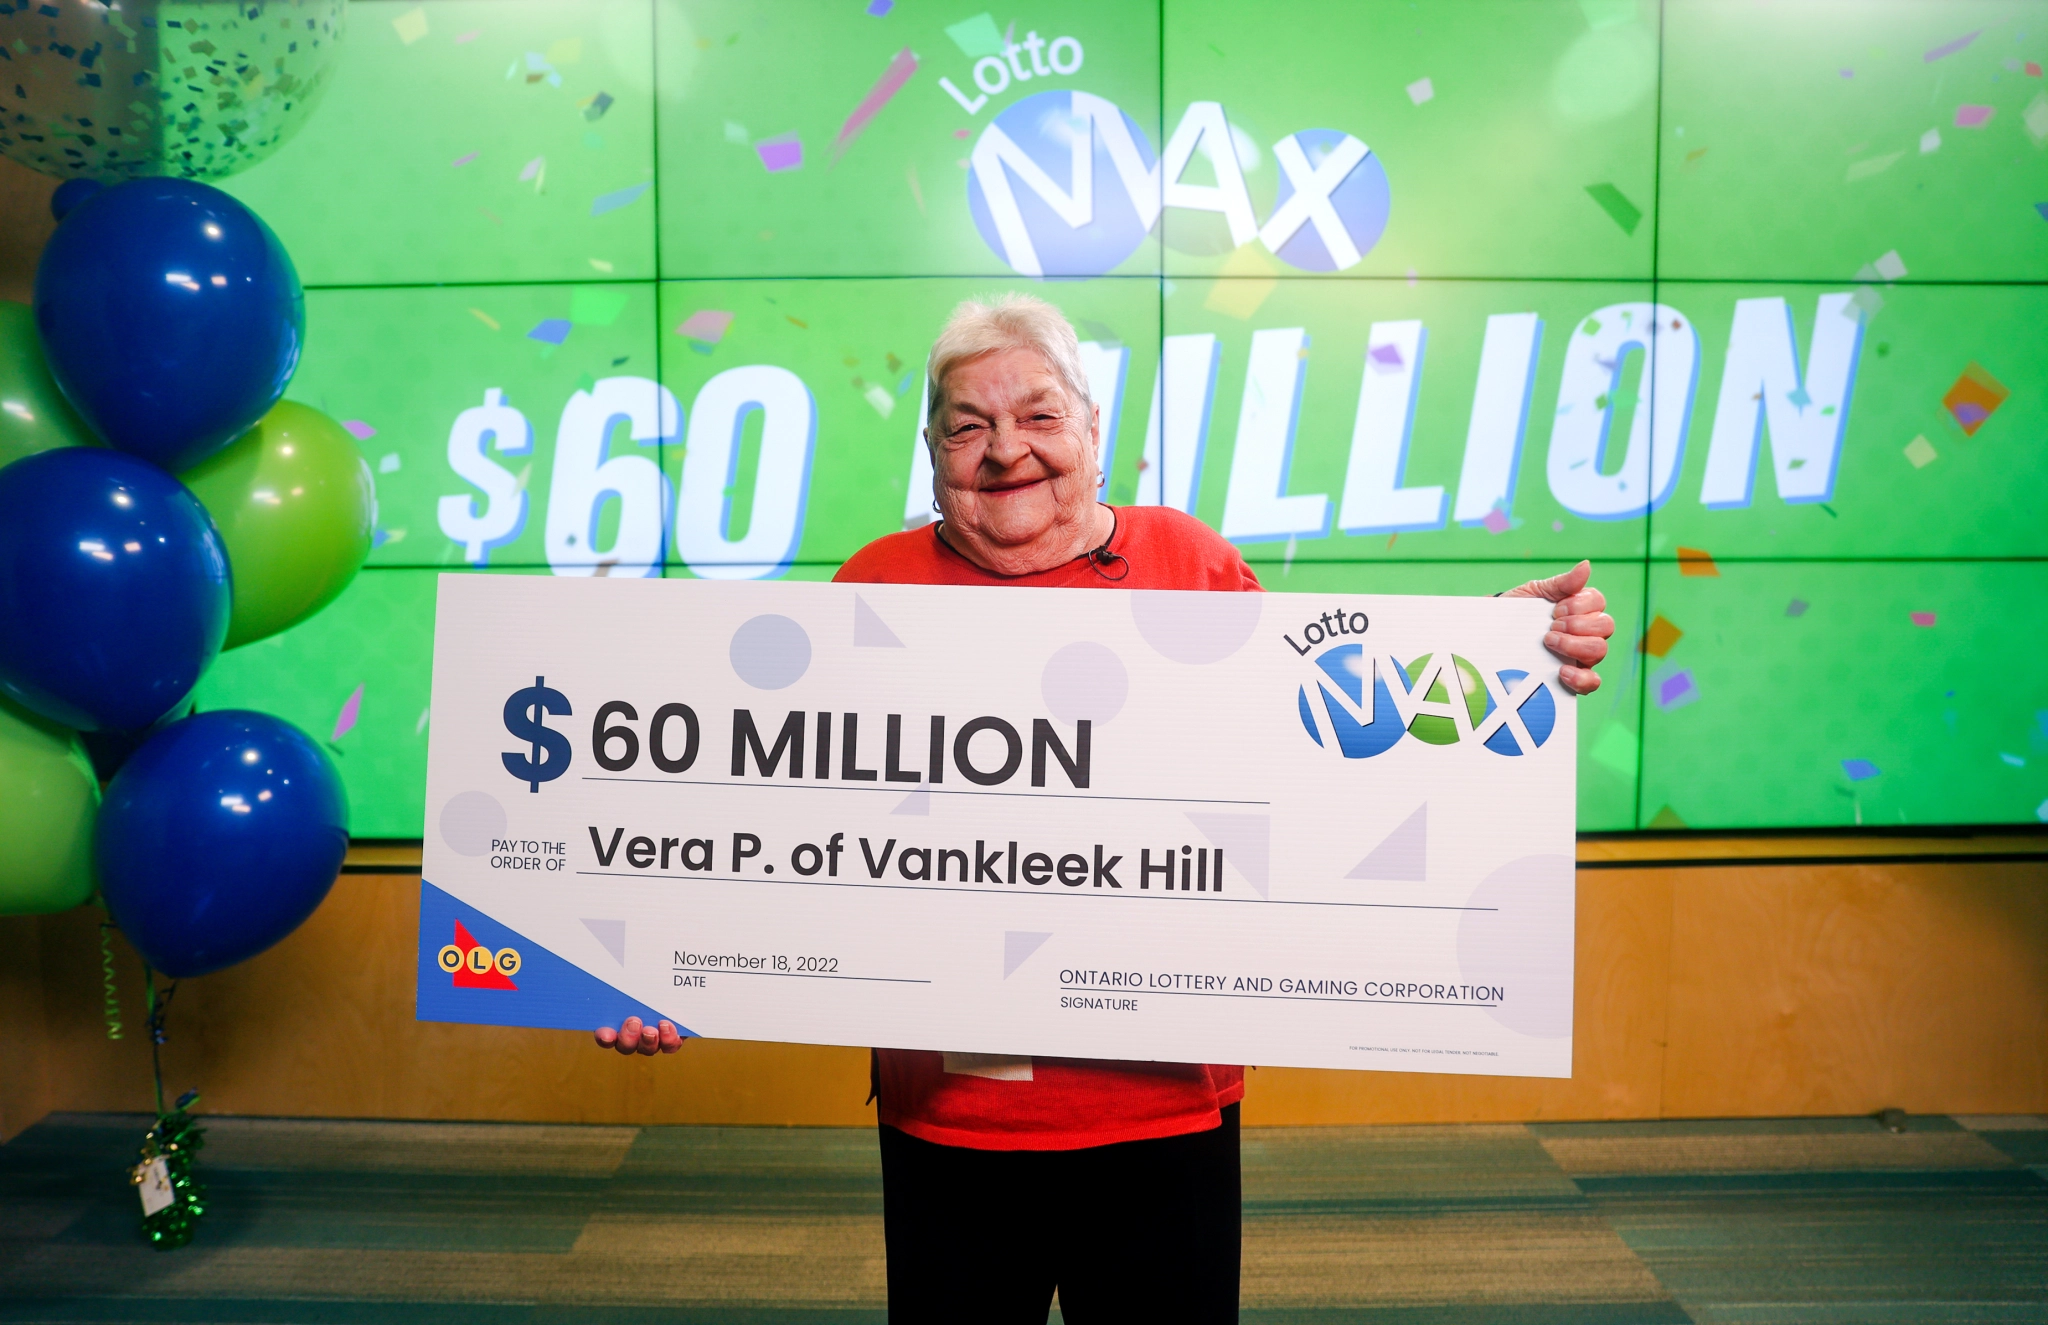 Vera Page الفائزة بجائزة لوتو ماكس الكبرى 60 مليون دولار